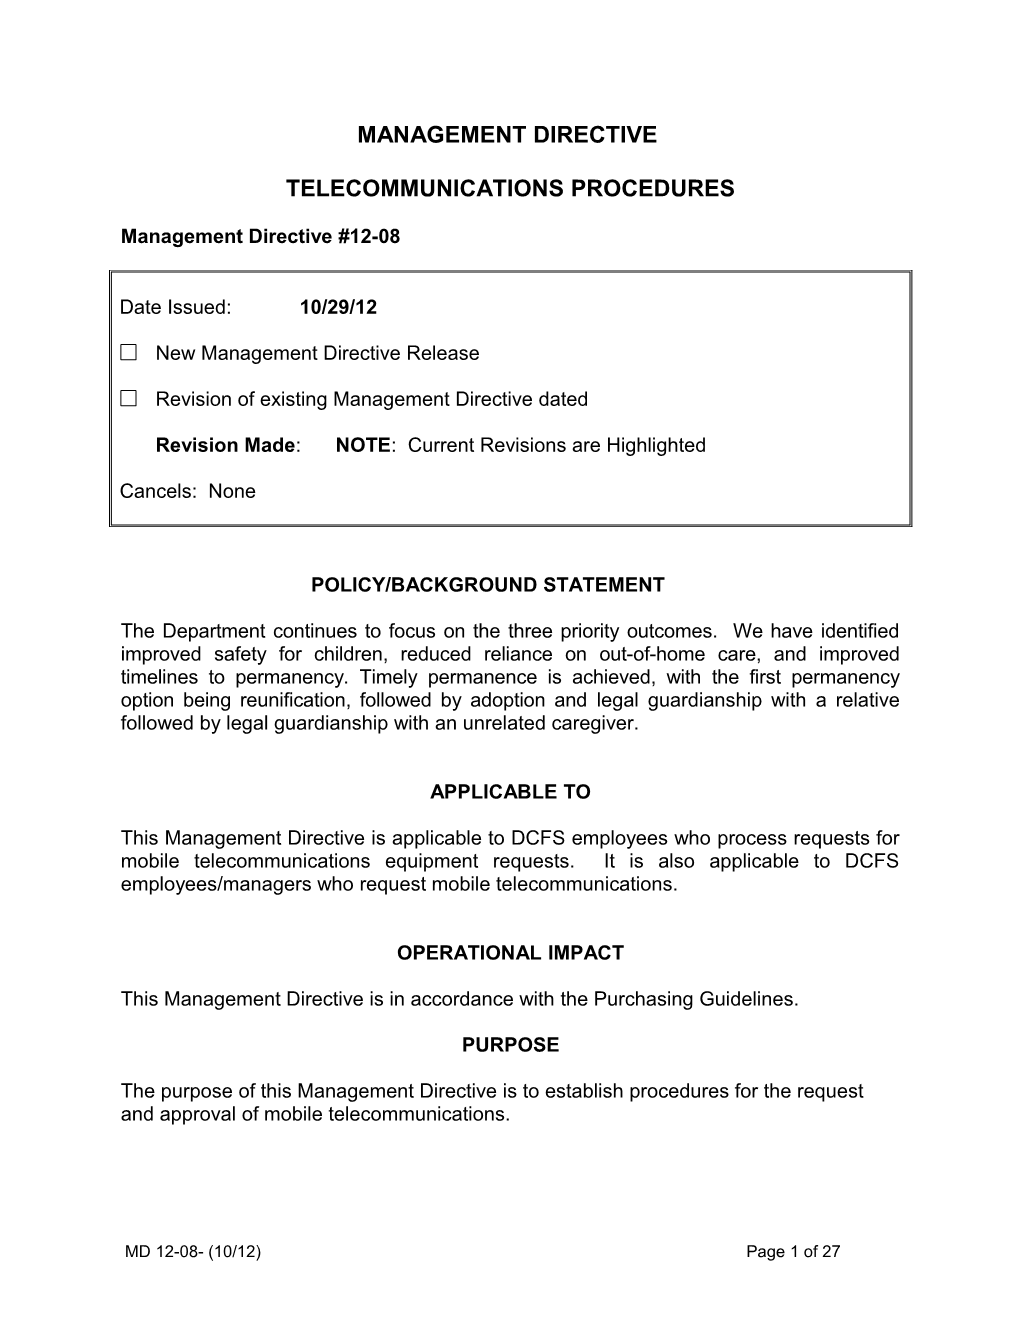 MD 12-08, Telecommunications Procedures s1